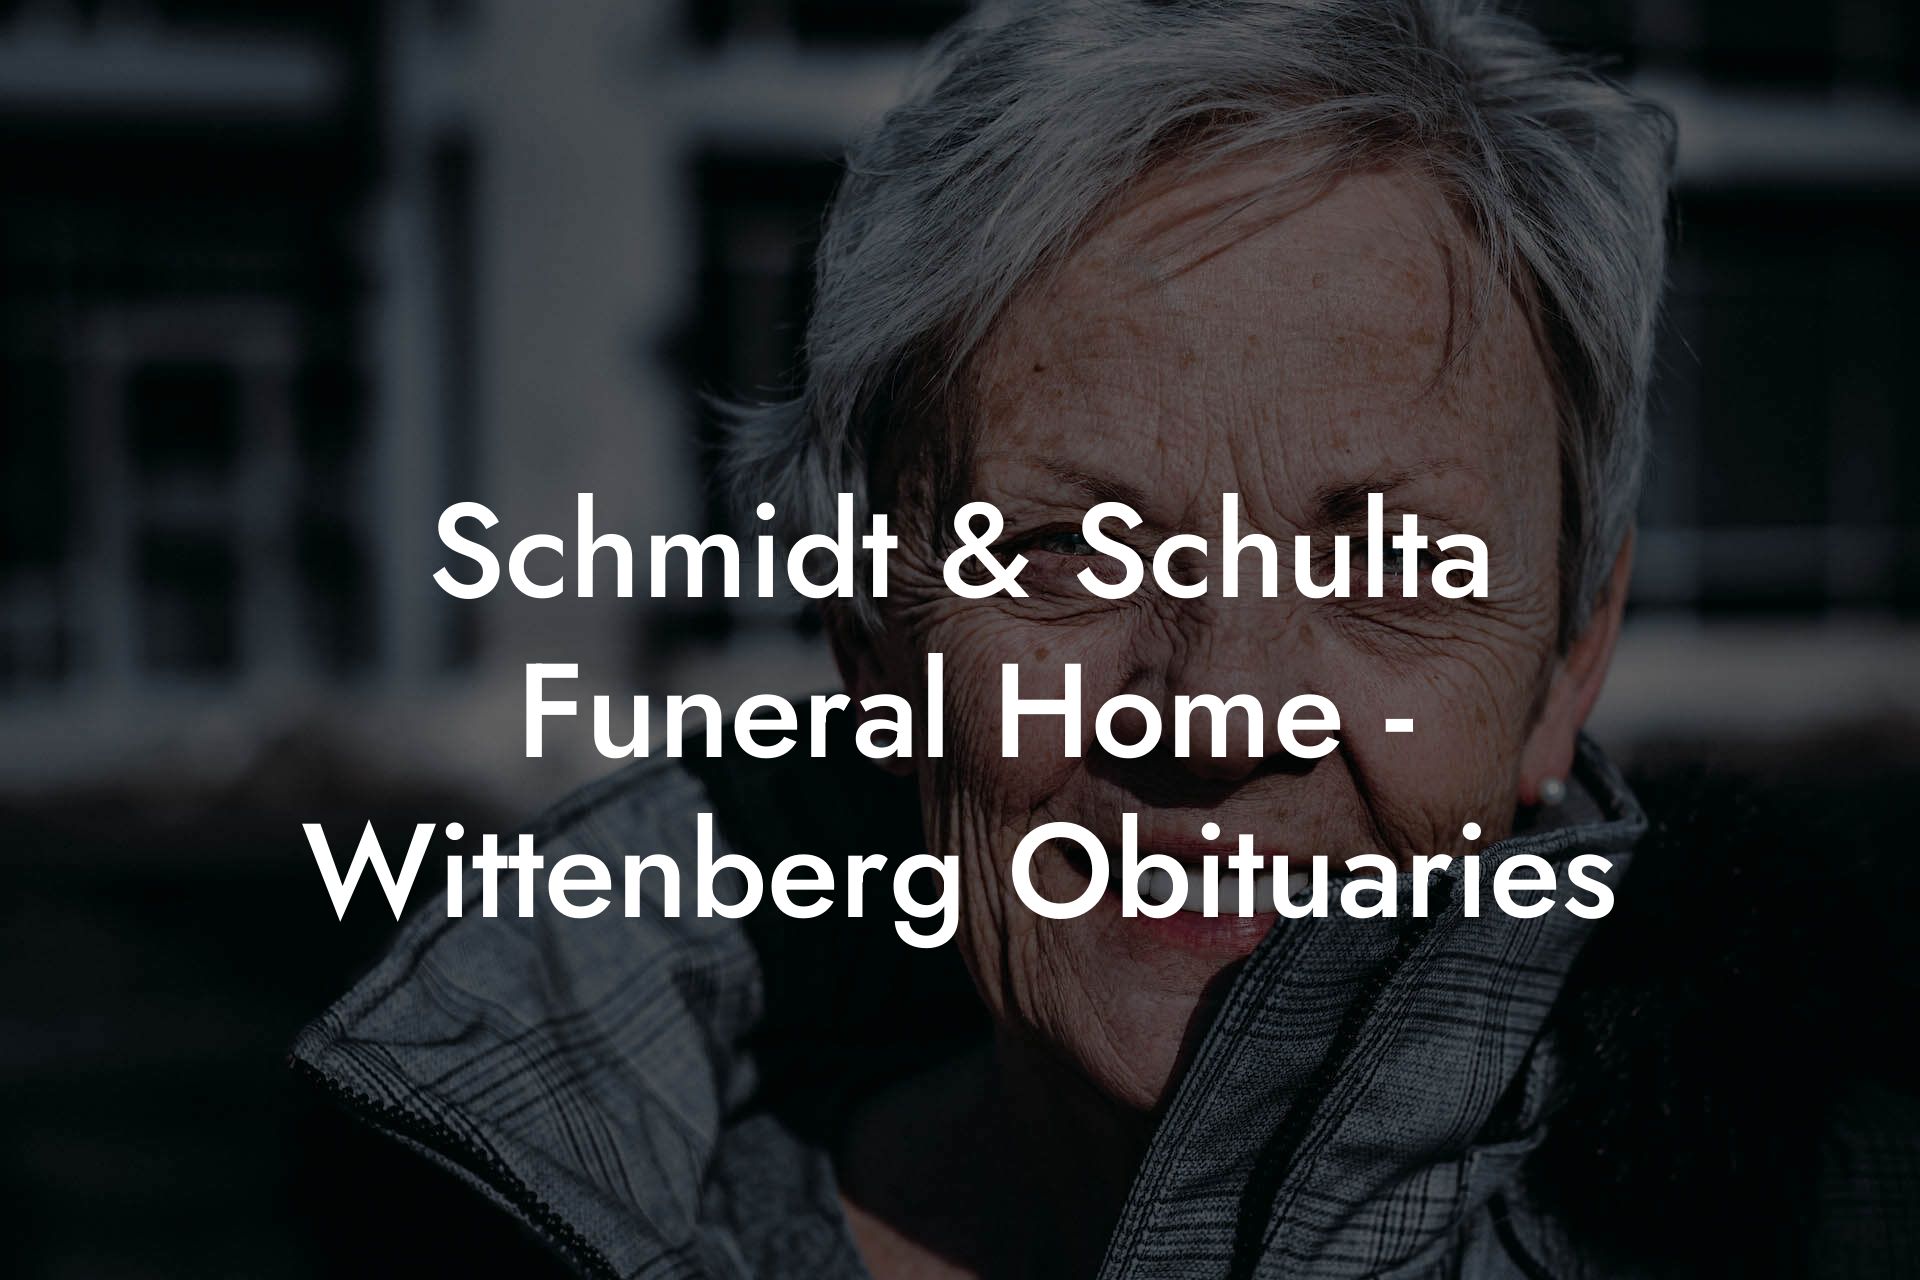 Schmidt & Schulta Funeral Home - Wittenberg Obituaries